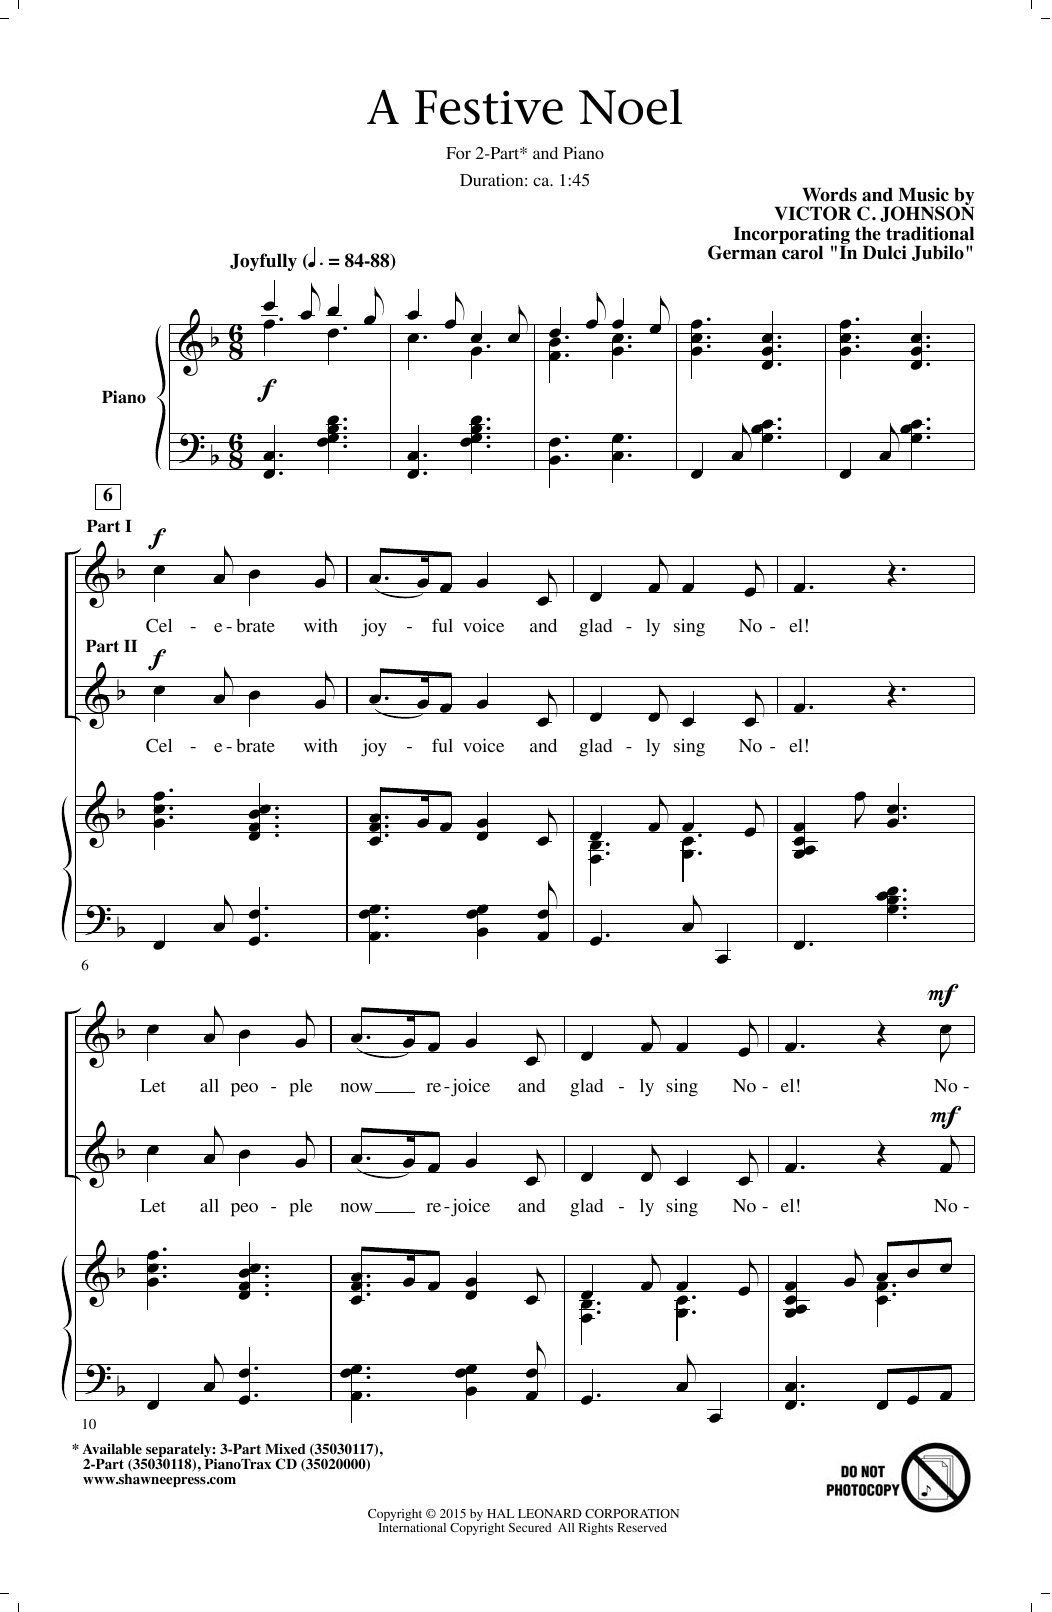 Victor C. Johnson A Festive Noel sheet music notes and chords arranged for SATB Choir